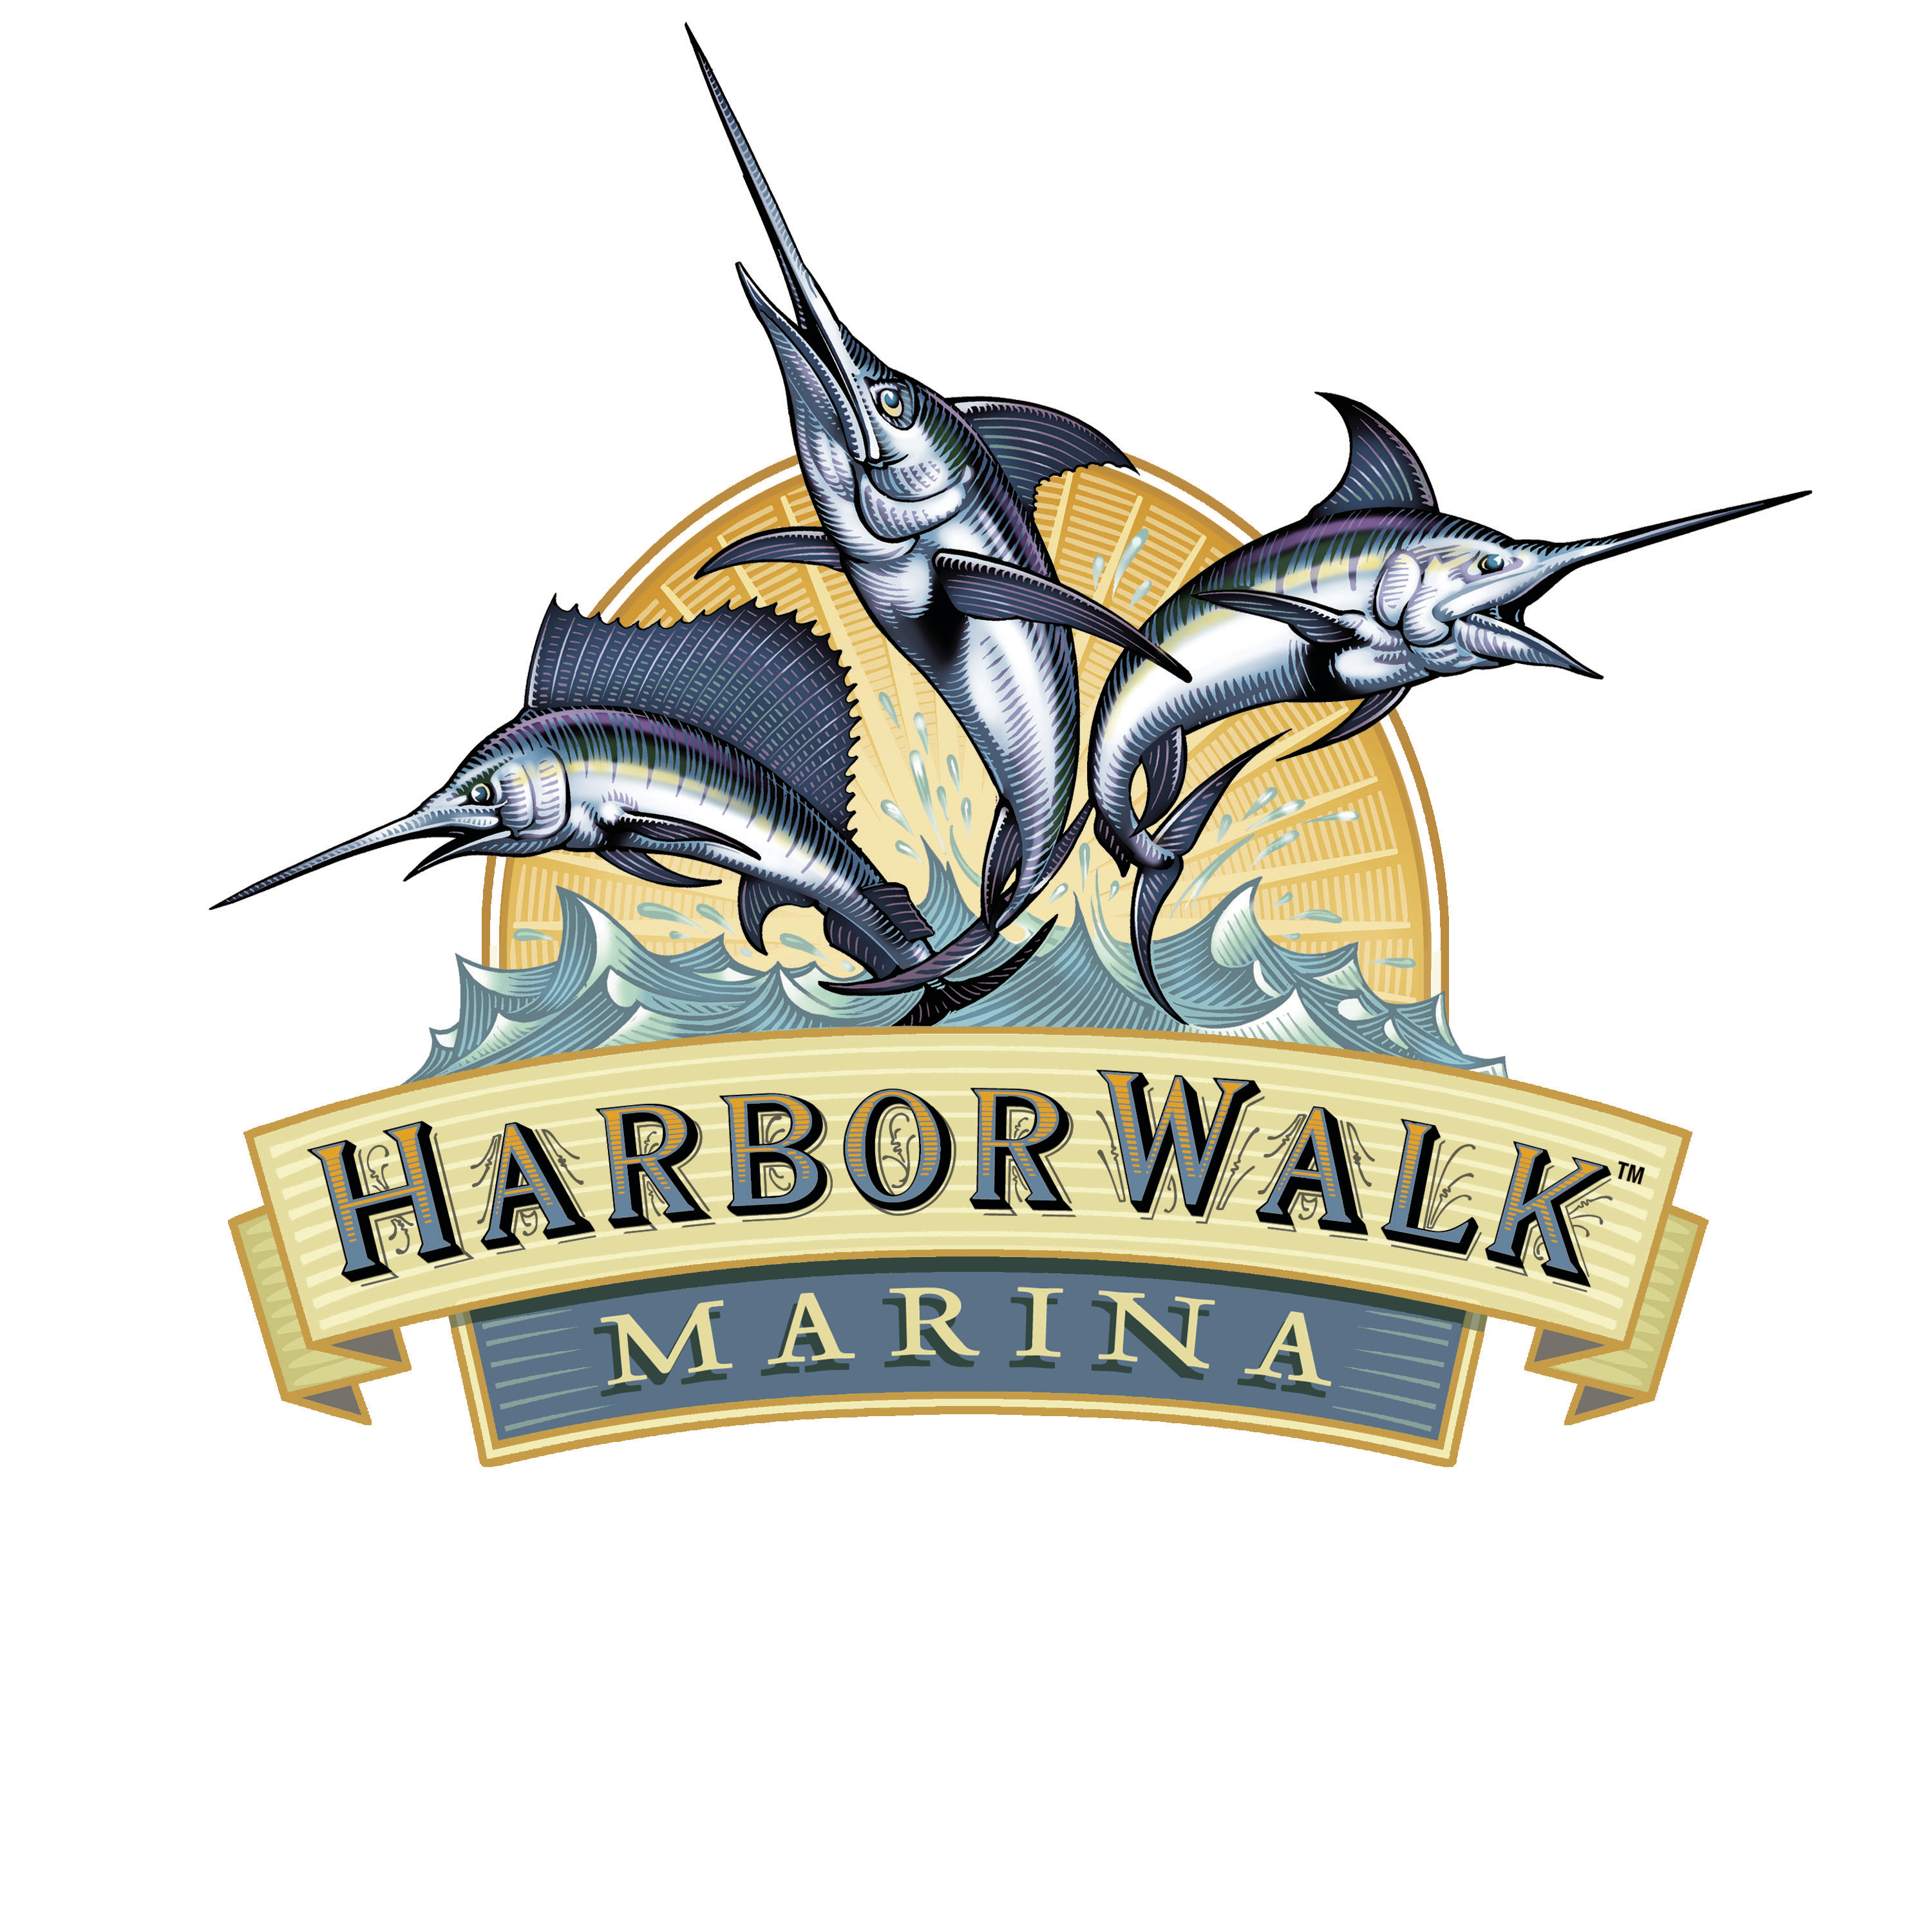 HarborWalk Marina Coupons near me in Destin | 8coupons